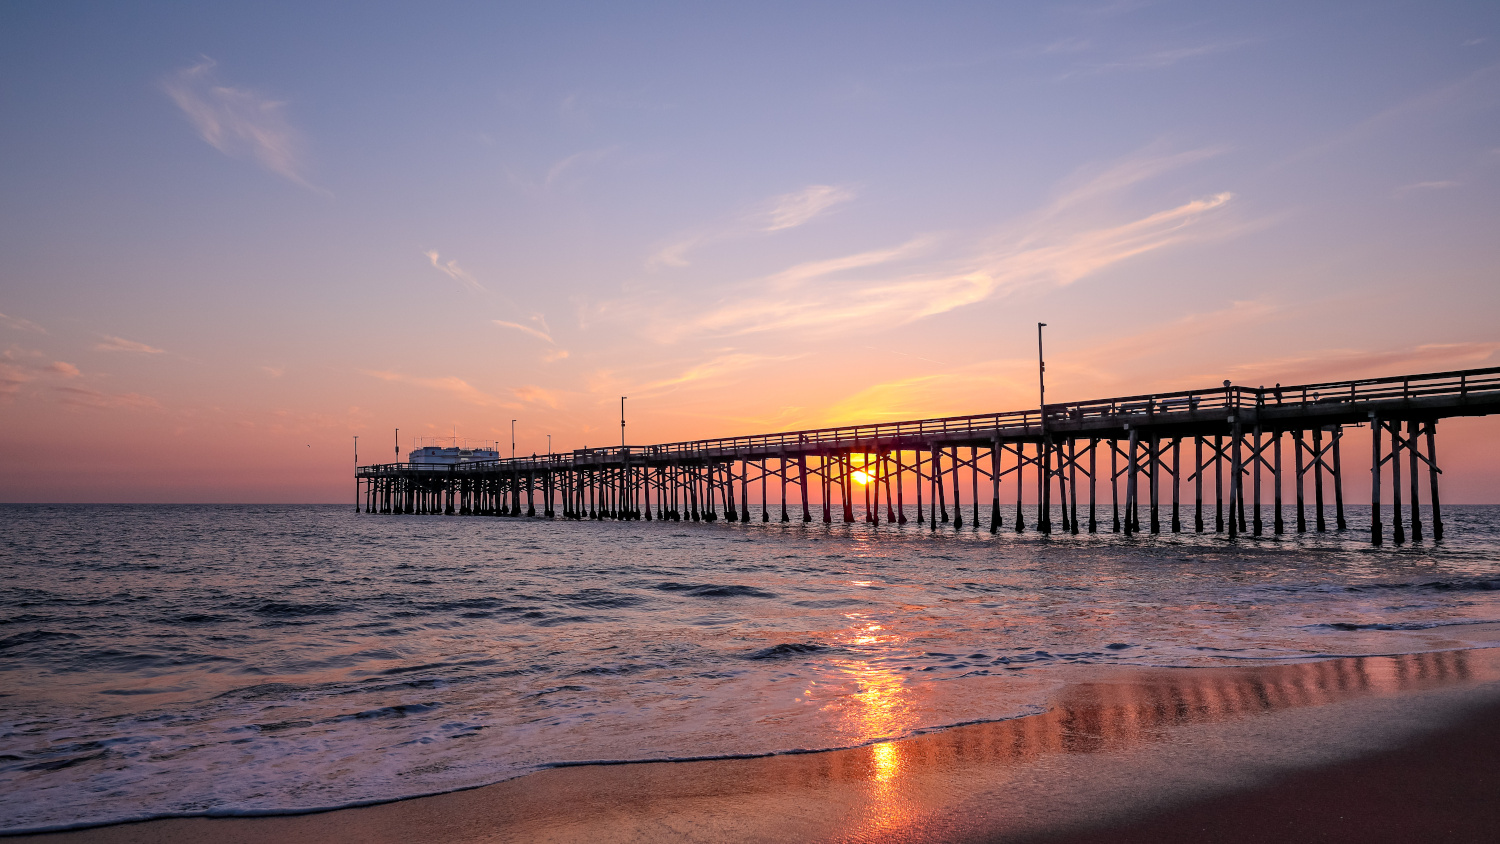 A setting sun behind the long pier, Irvine, Orange County, California